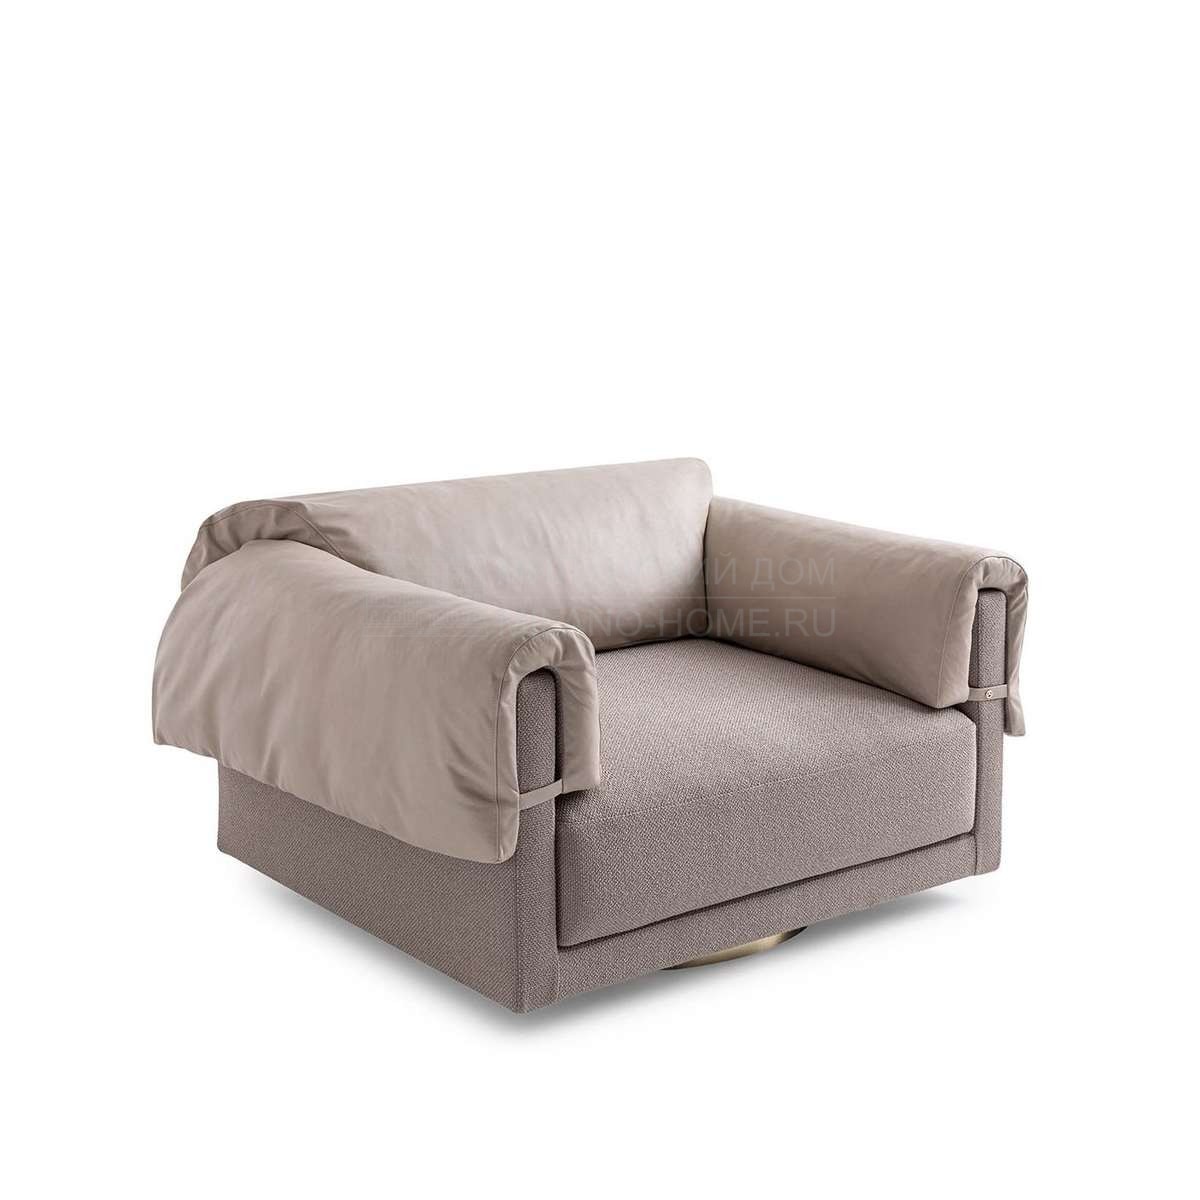 Кресло Jet set armchair  из Италии фабрики FENDI Casa